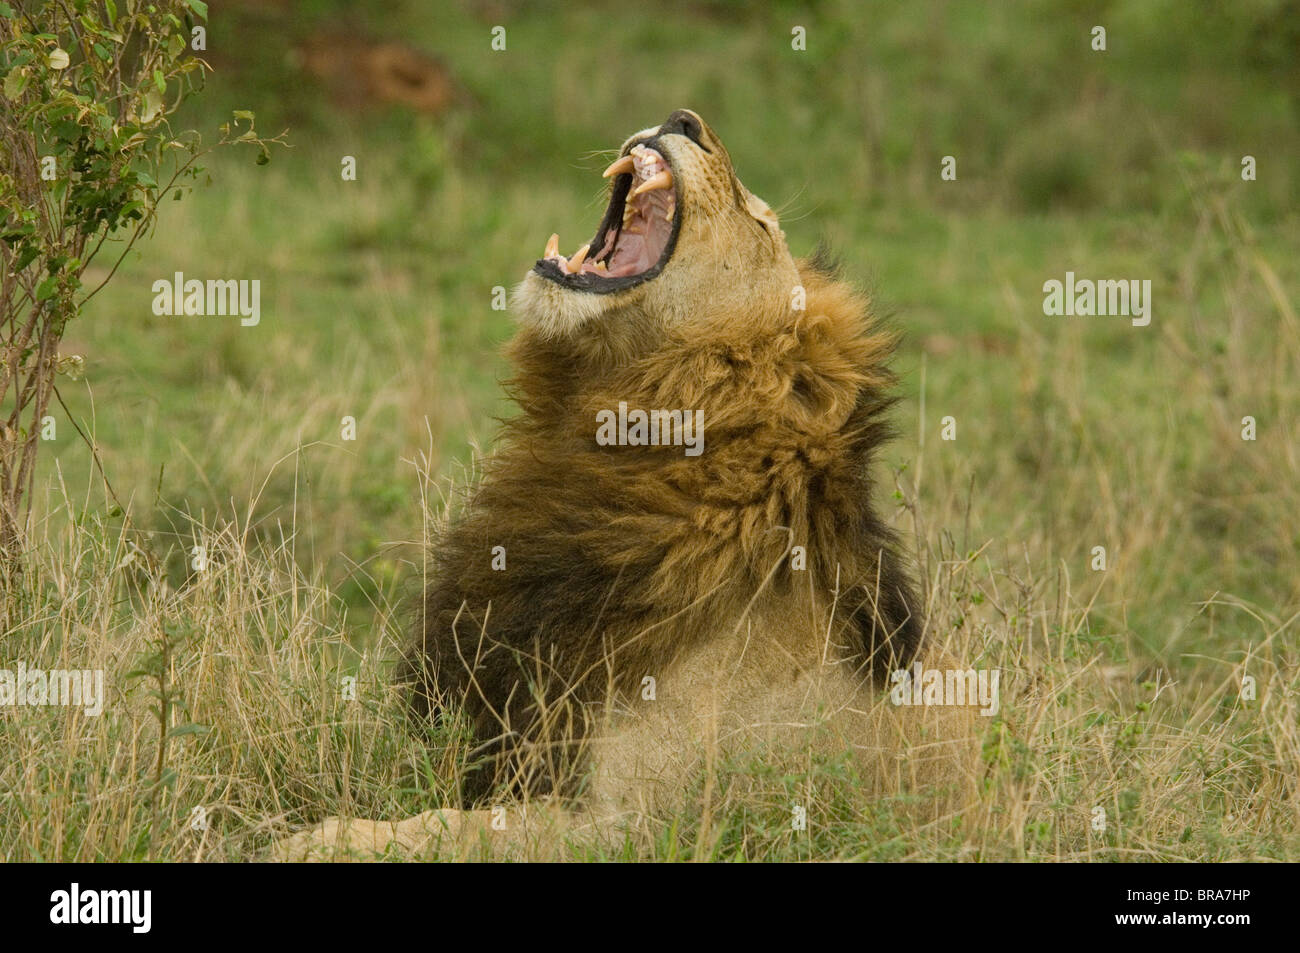 ROARING OR YAWNING LION MASAI MARA NATIONAL RESERVE KENYA AFRICA Stock Photo